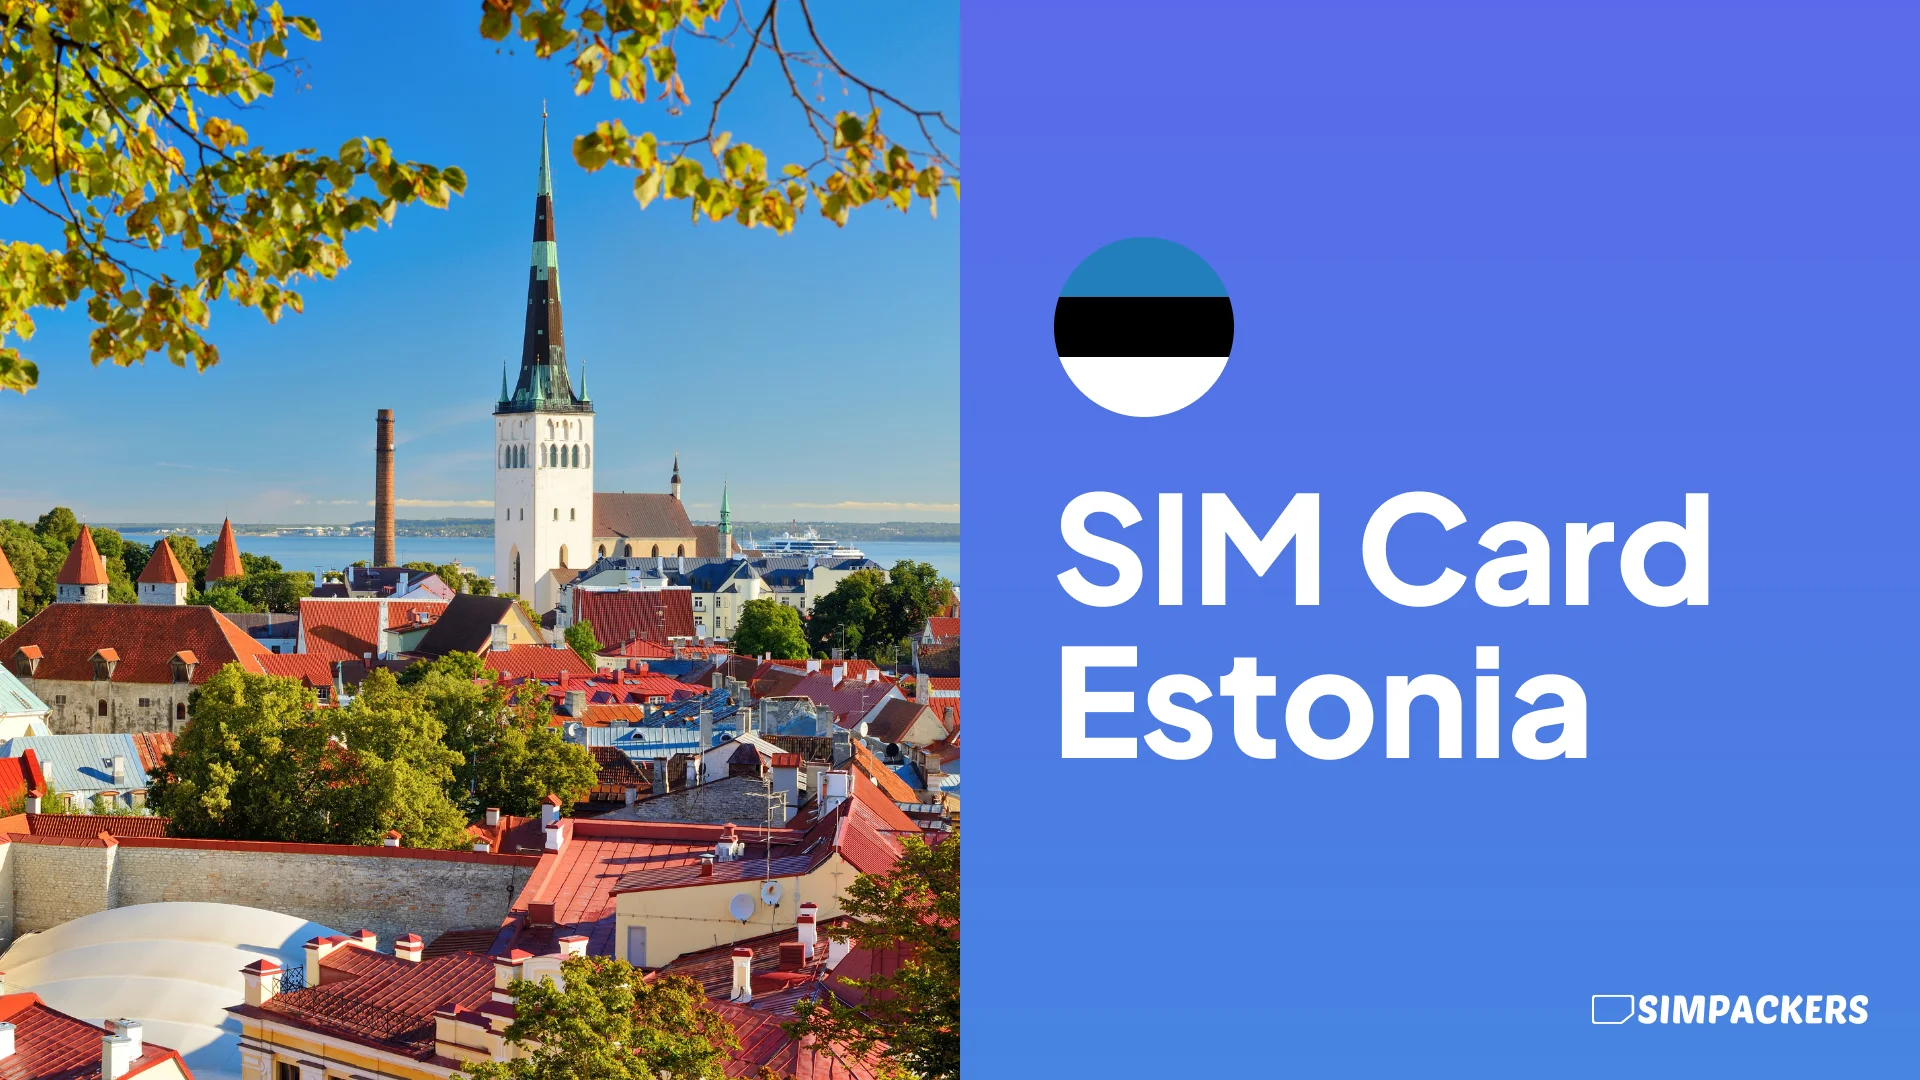 EN/FEATURED_IMAGES/sim-card-estonia.webp